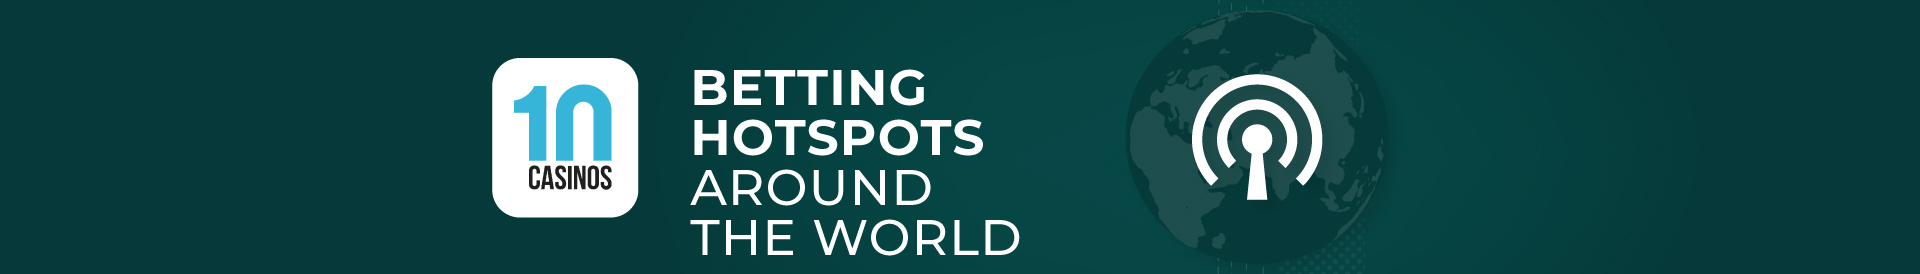 top 10 popular gambling cities betting hotspots around the world desktop